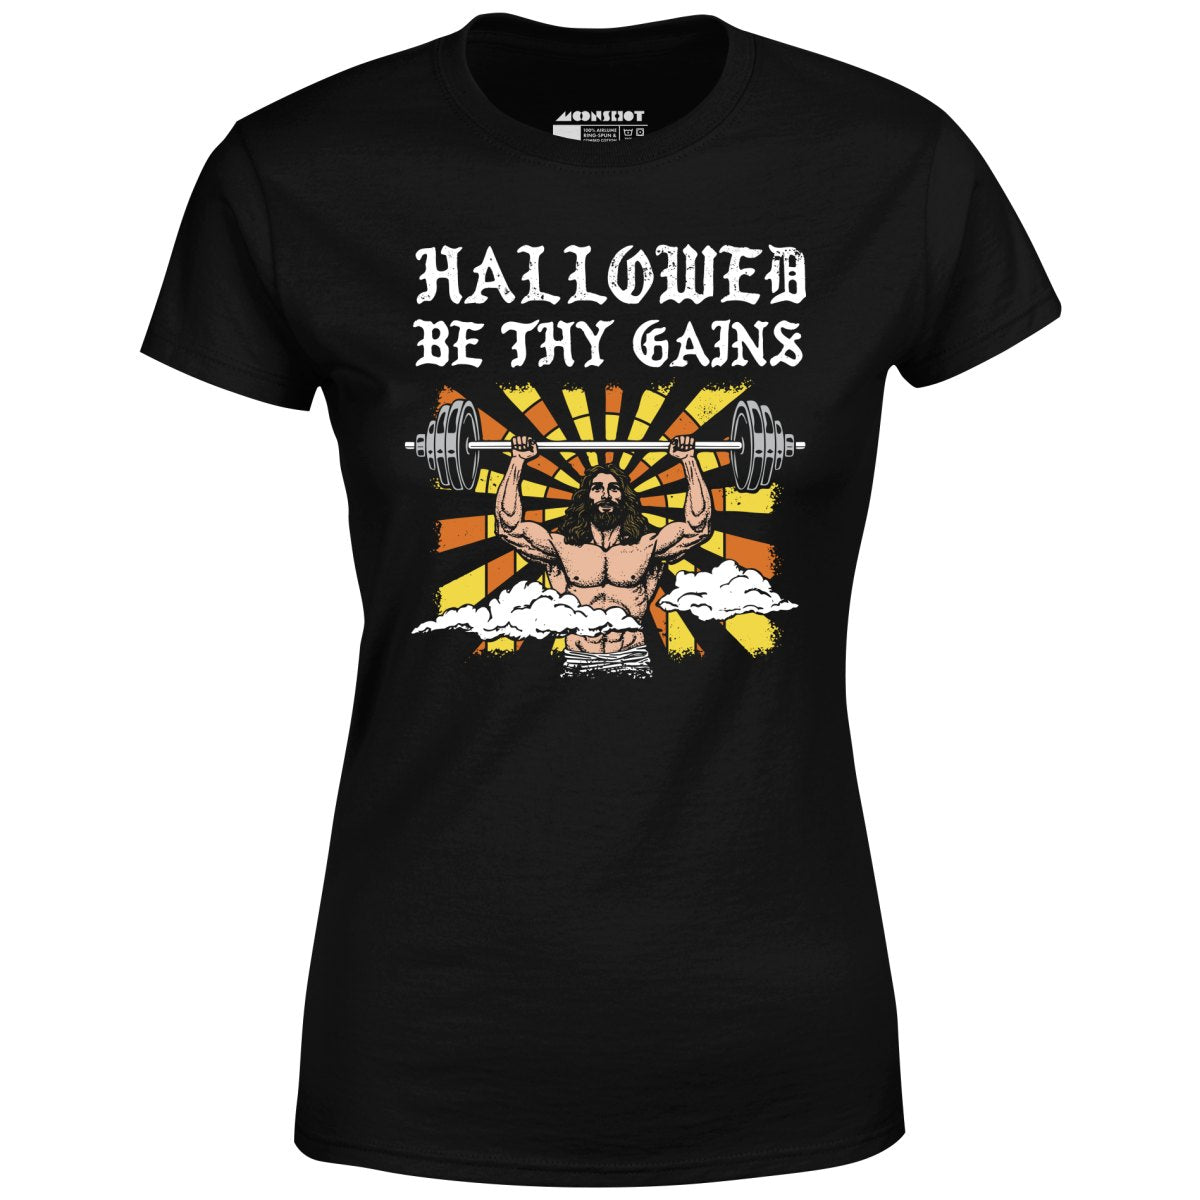 Hallowed Be Thy Gains - Women's T-Shirt